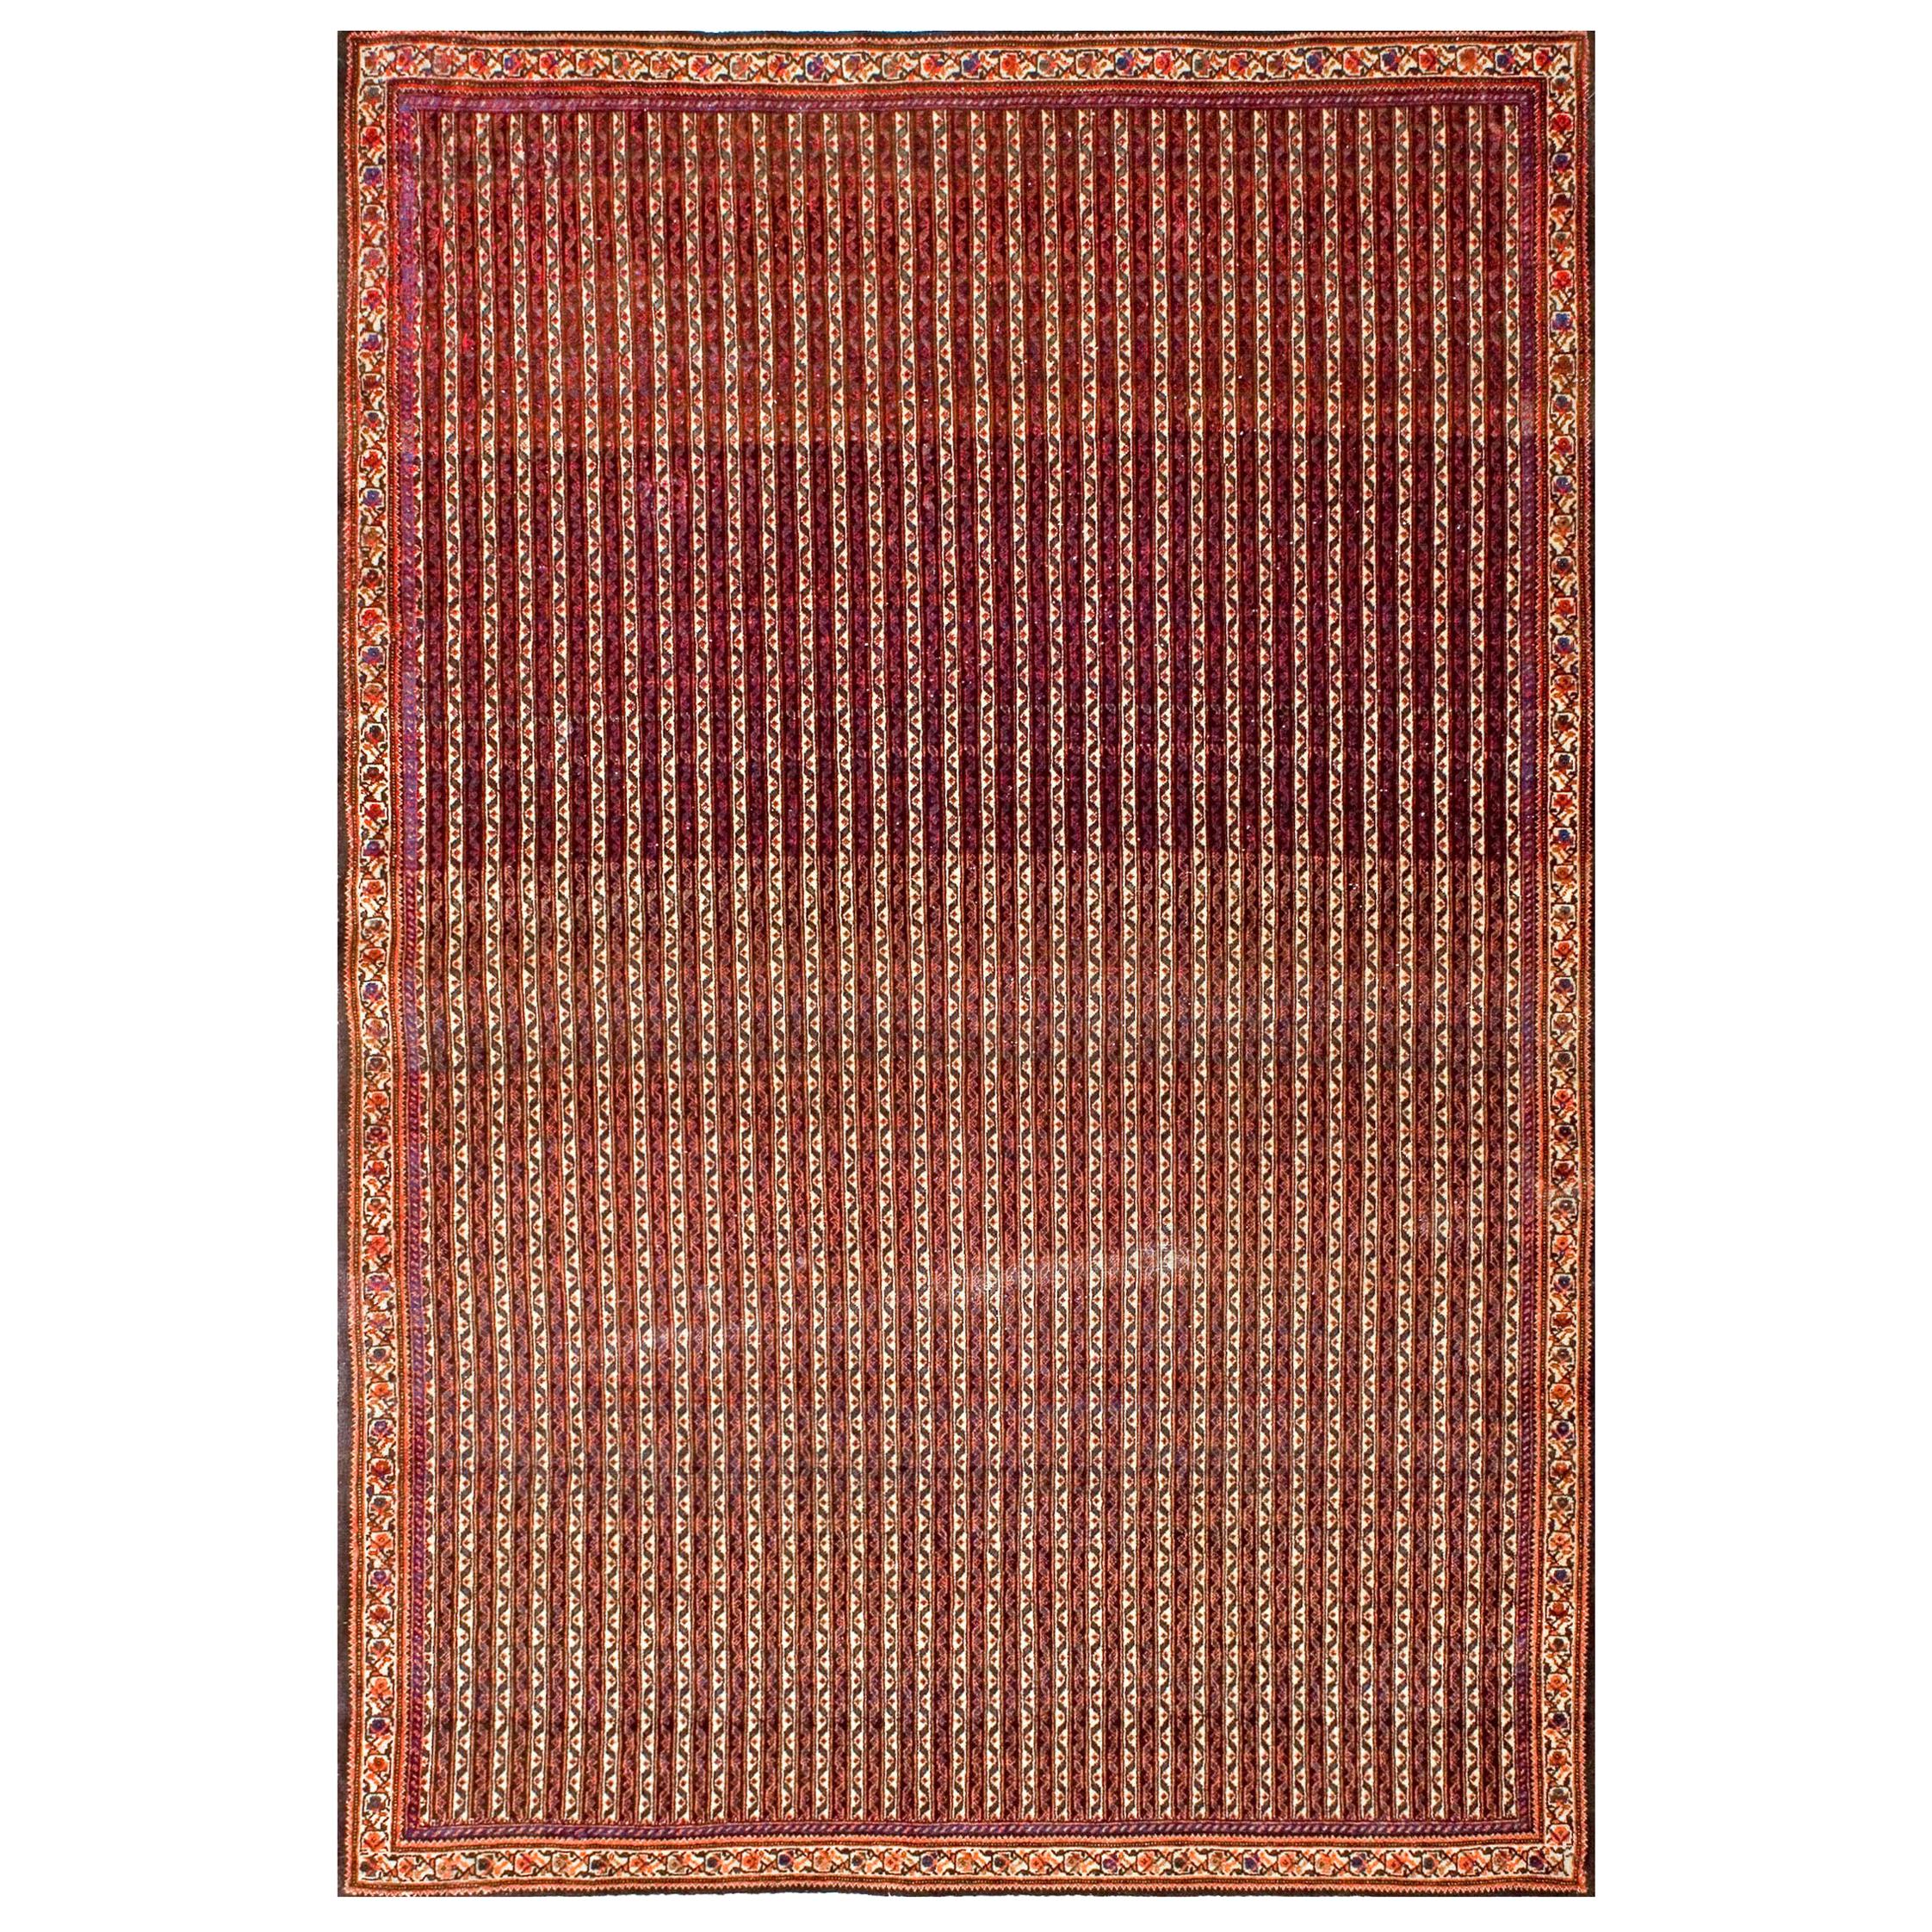 Late 19th Persian Sarouk Farahan Carpet ( 4'2" x 6'6" - 127 x 198 cm )